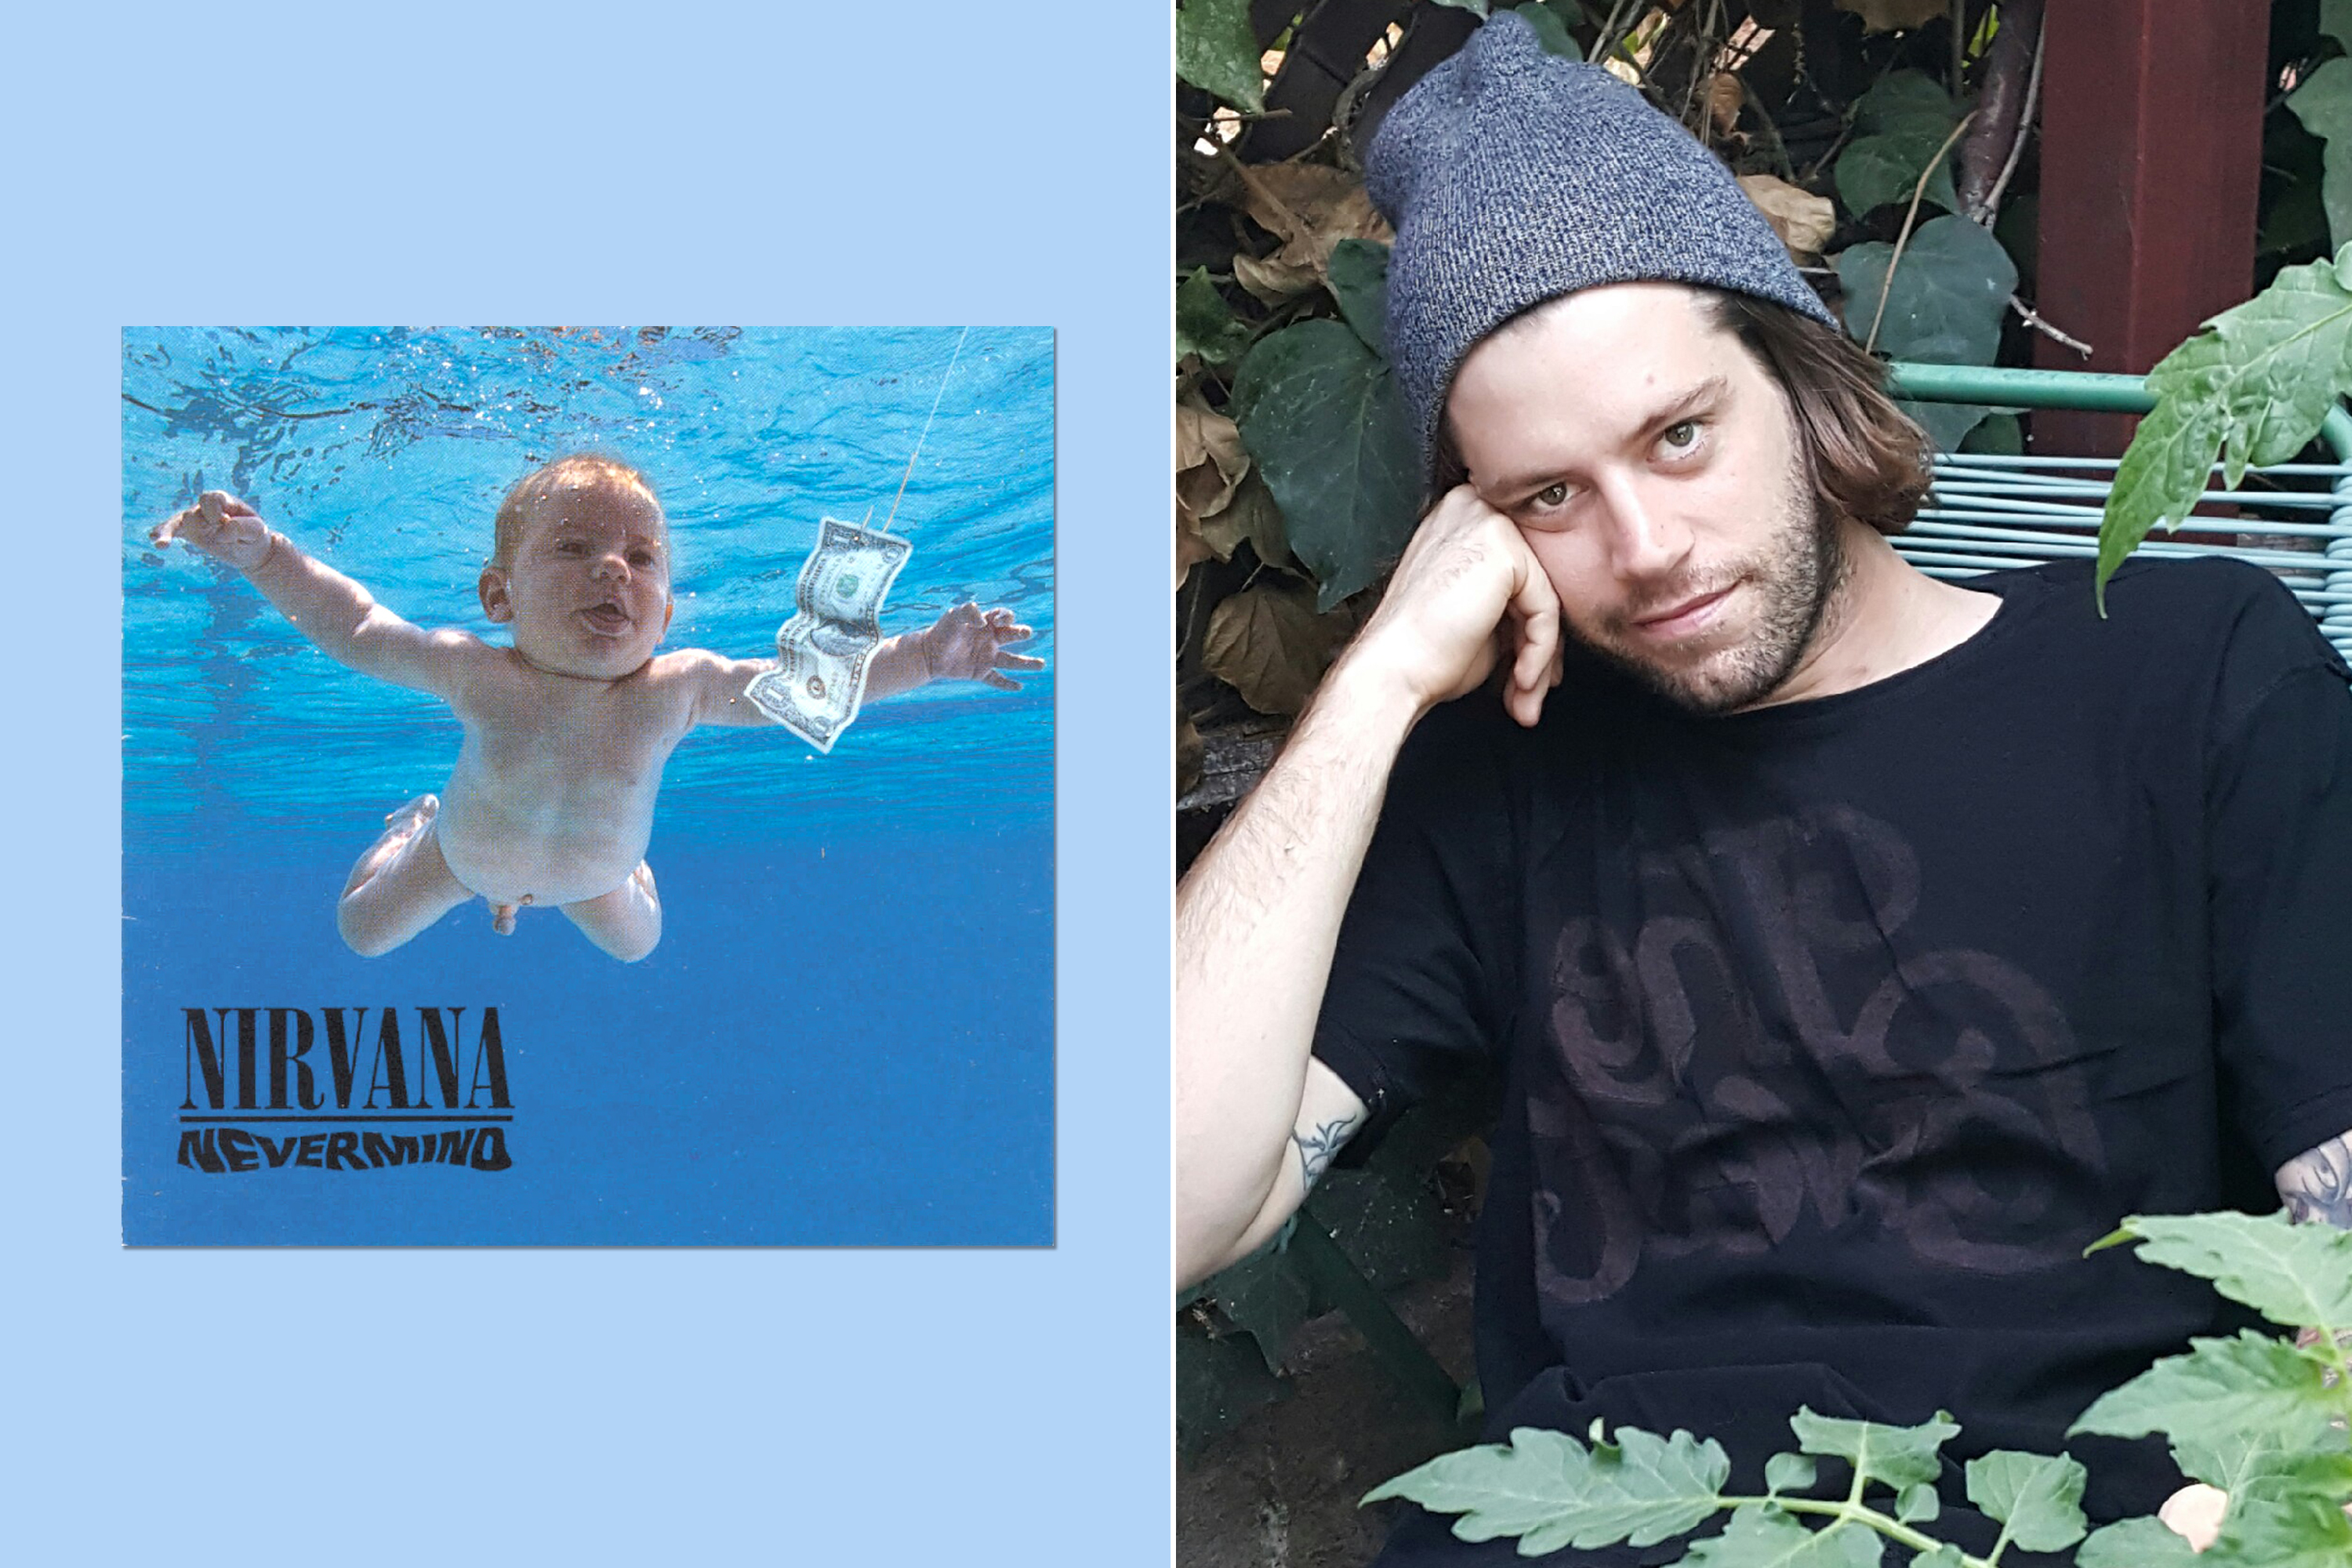 Nirvana 'Nevermind' Baby at 25: Spencer Elden | Time